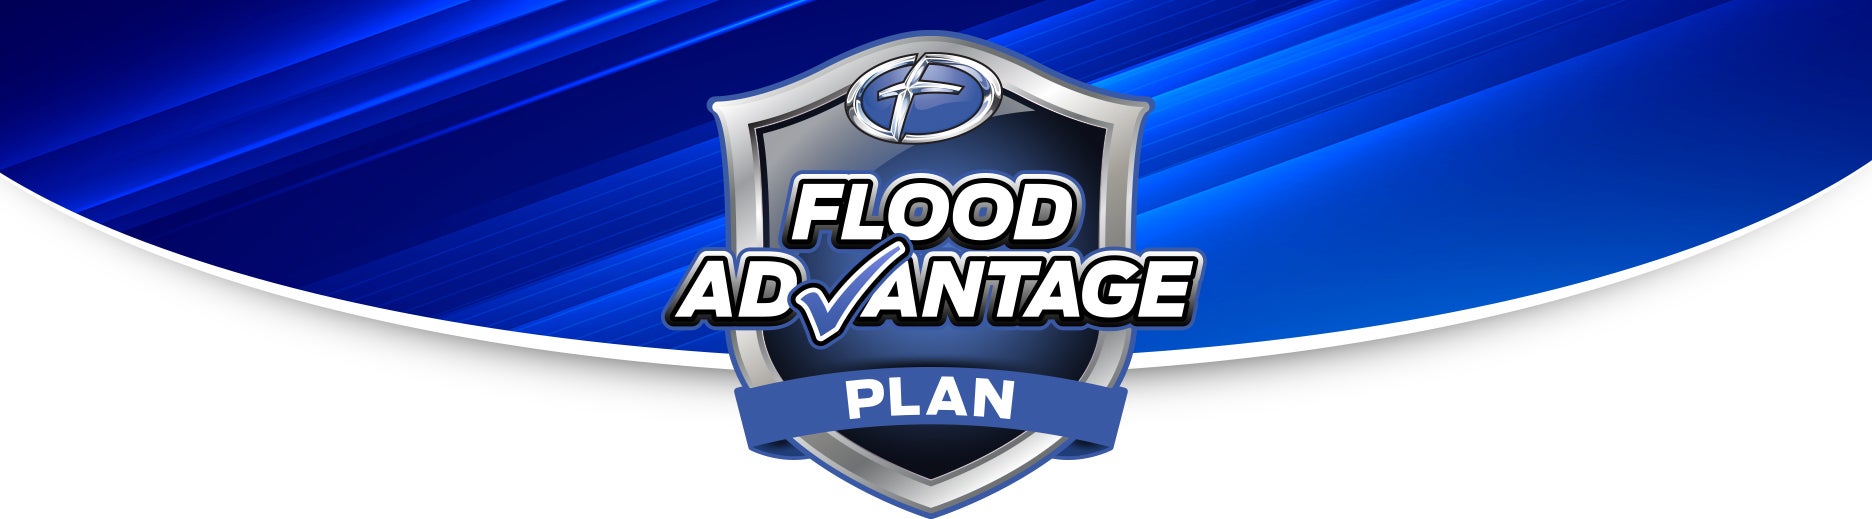 Flood Advantage Plan